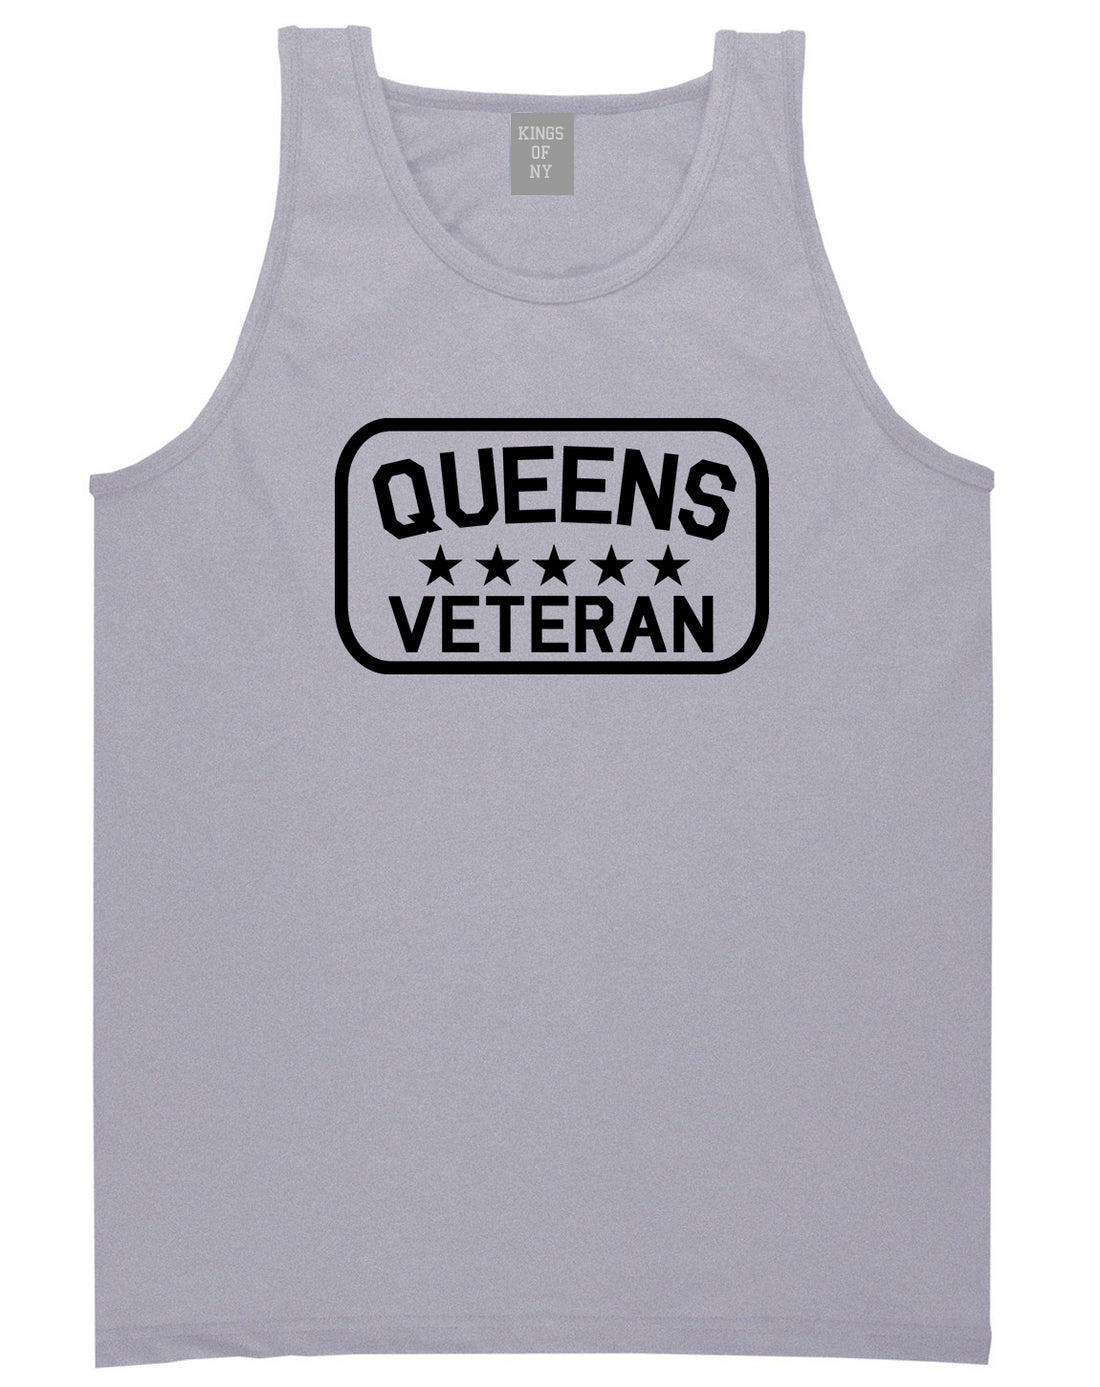 Queens Veteran Mens Tank Top Shirt Grey